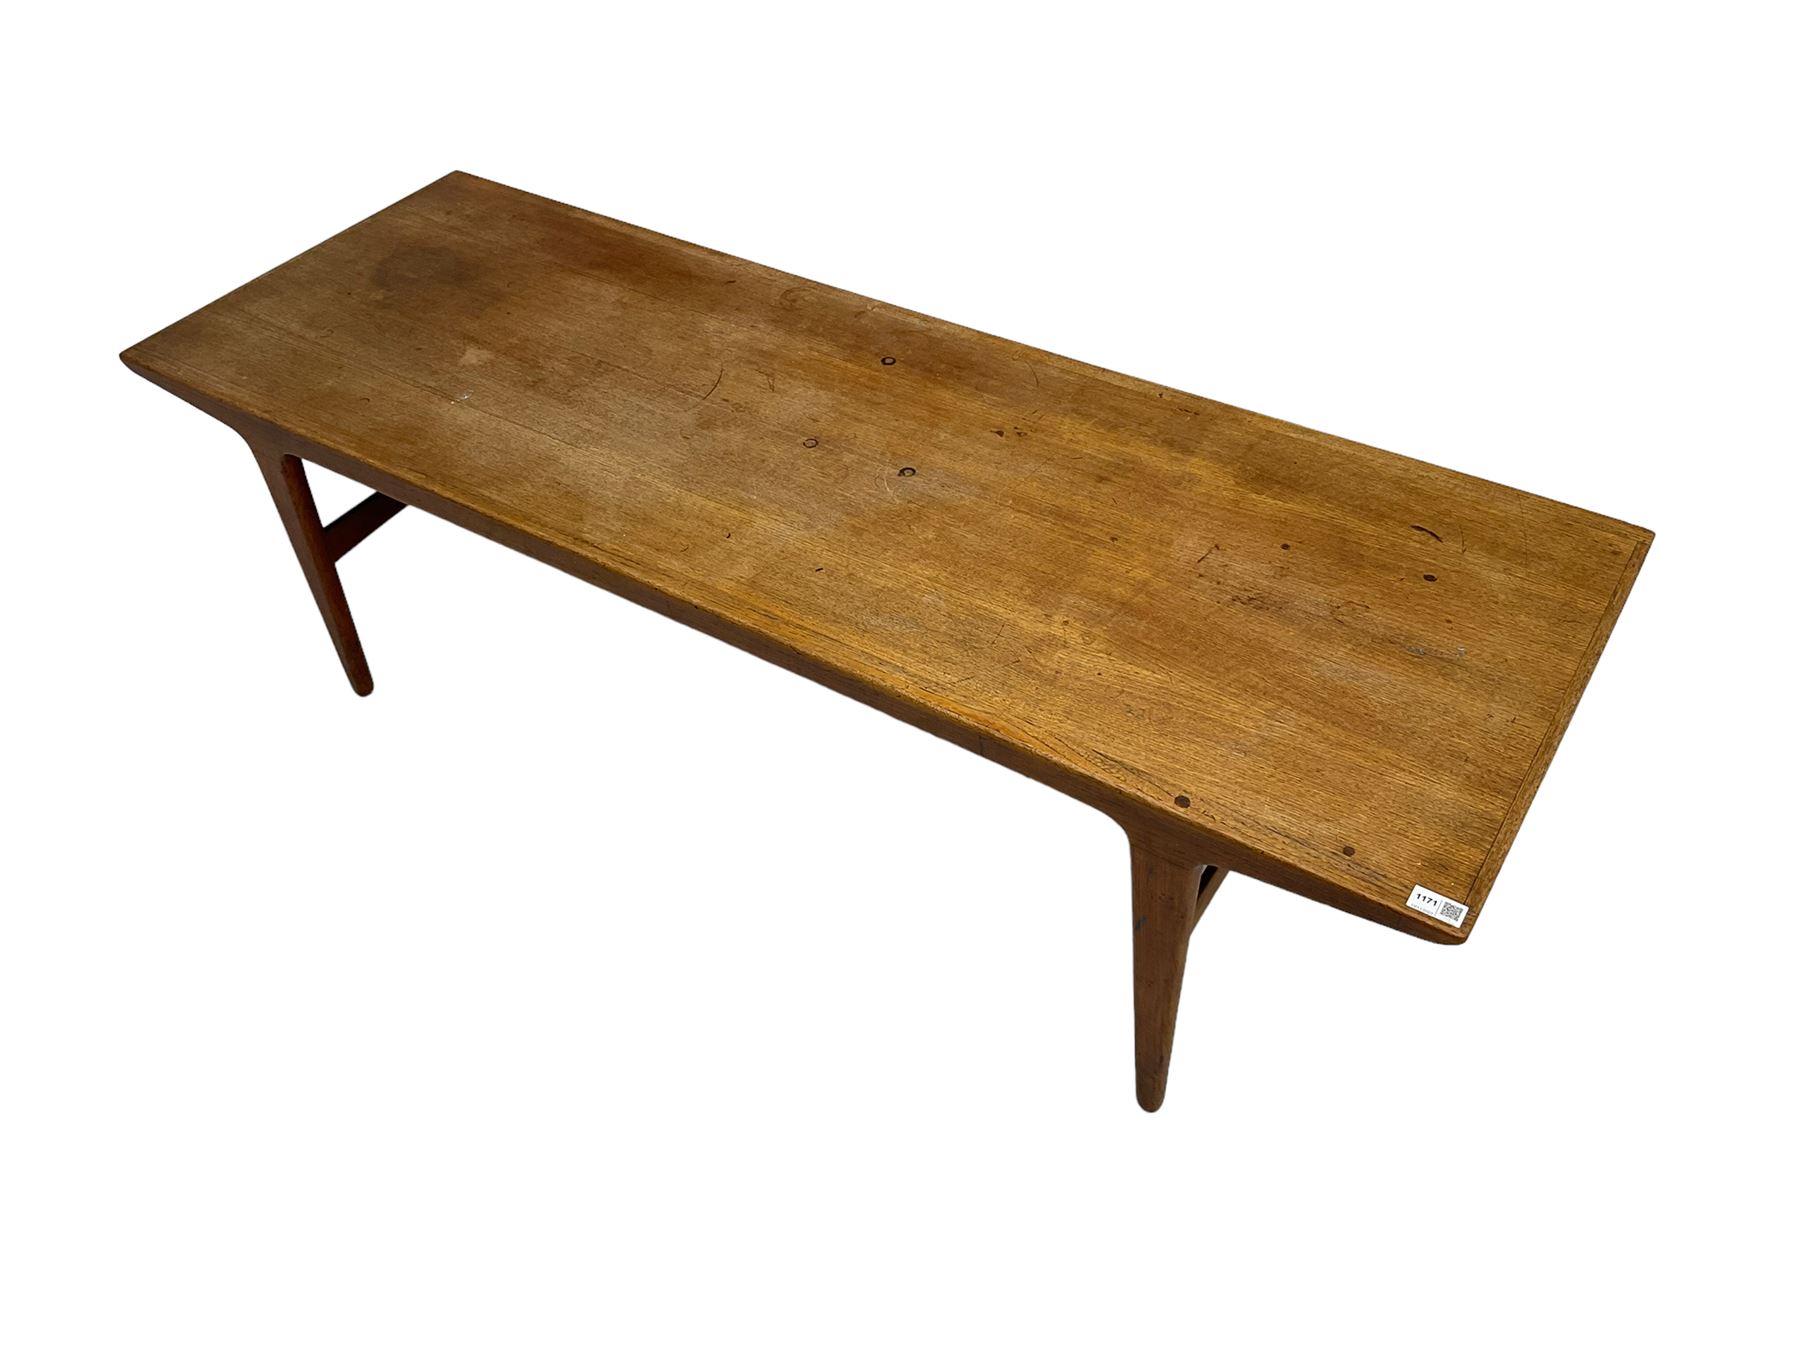 Mid-20th century teak rectangular coffee table - Image 3 of 6